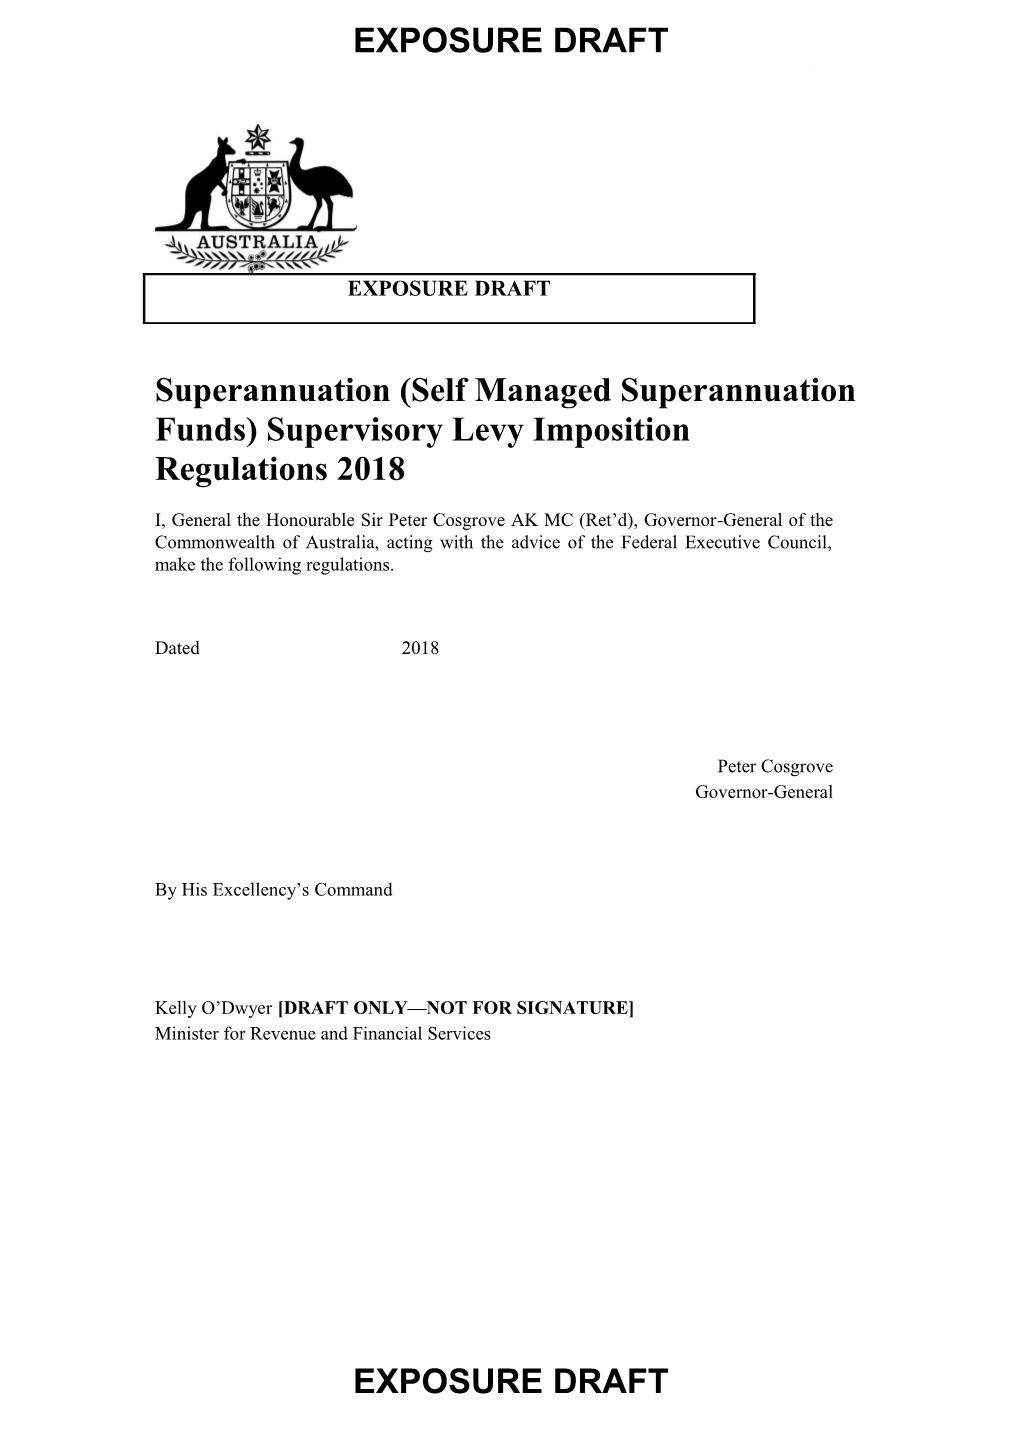 Exposure Draft - Superannuation (Self Managed Superannuation Funds) Supervisory Levy Imposition